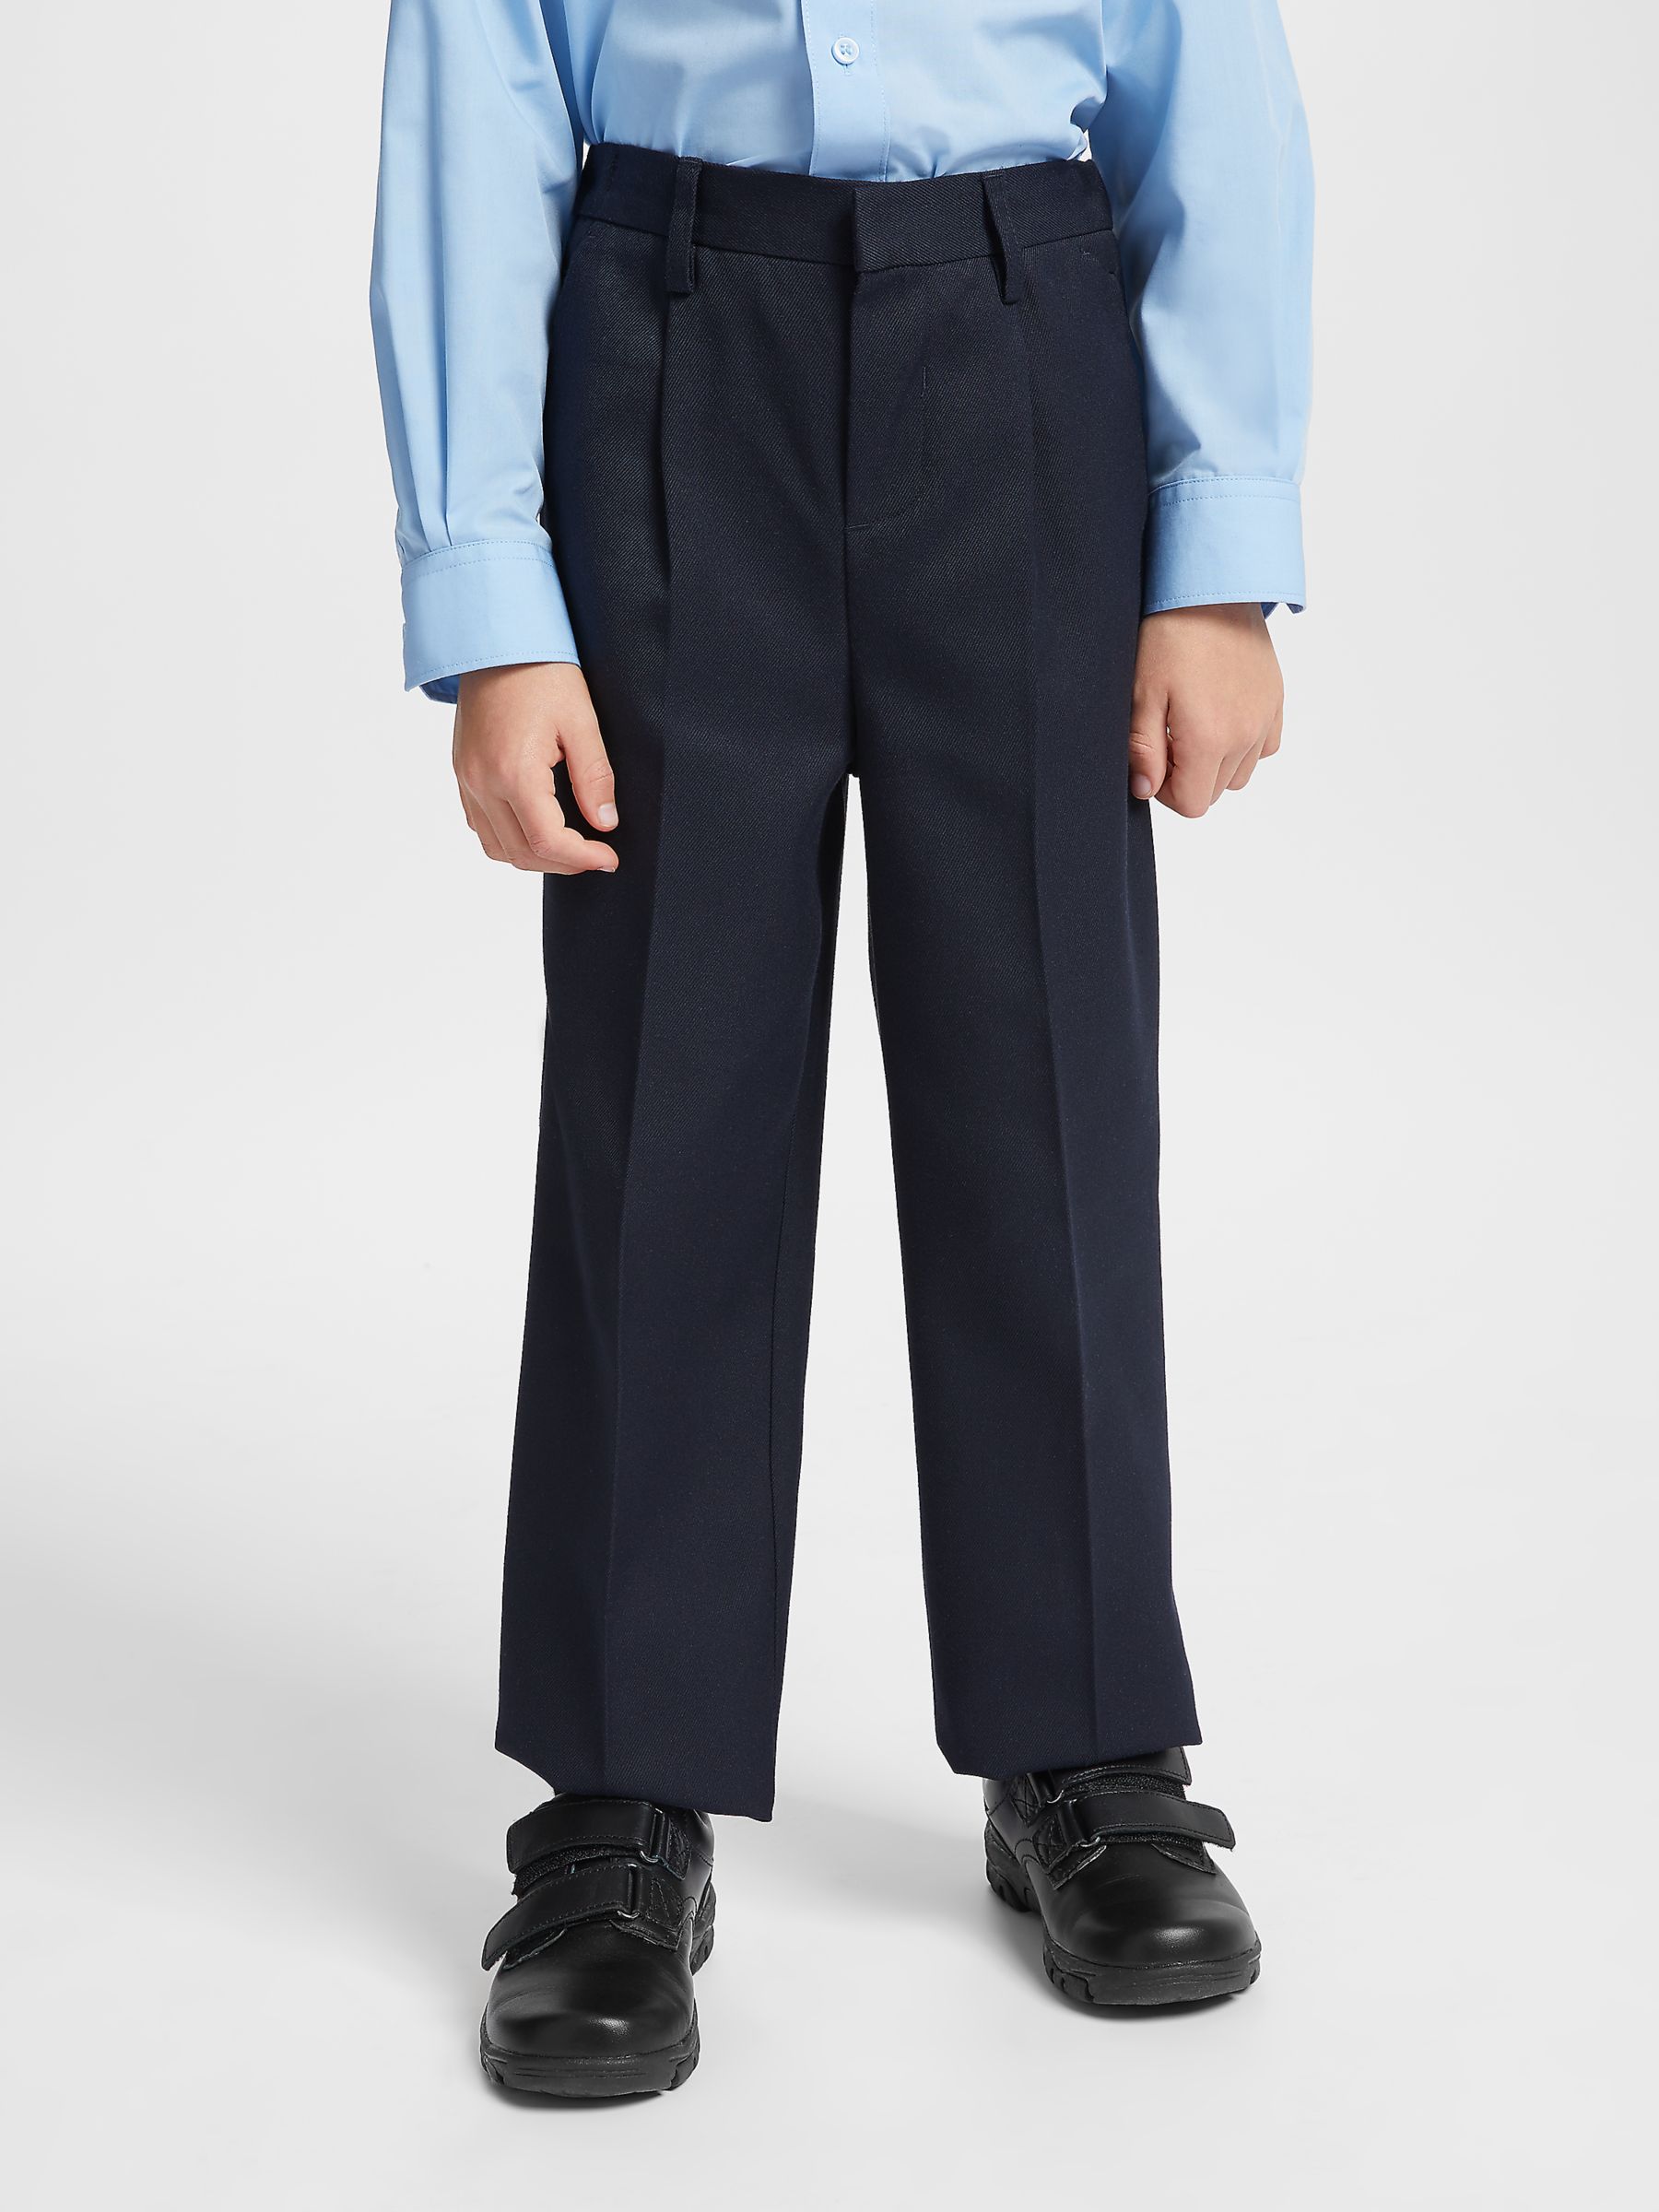 John Lewis Boys' Adjustable Waist Generous Fit Stain Resistant School Trousers